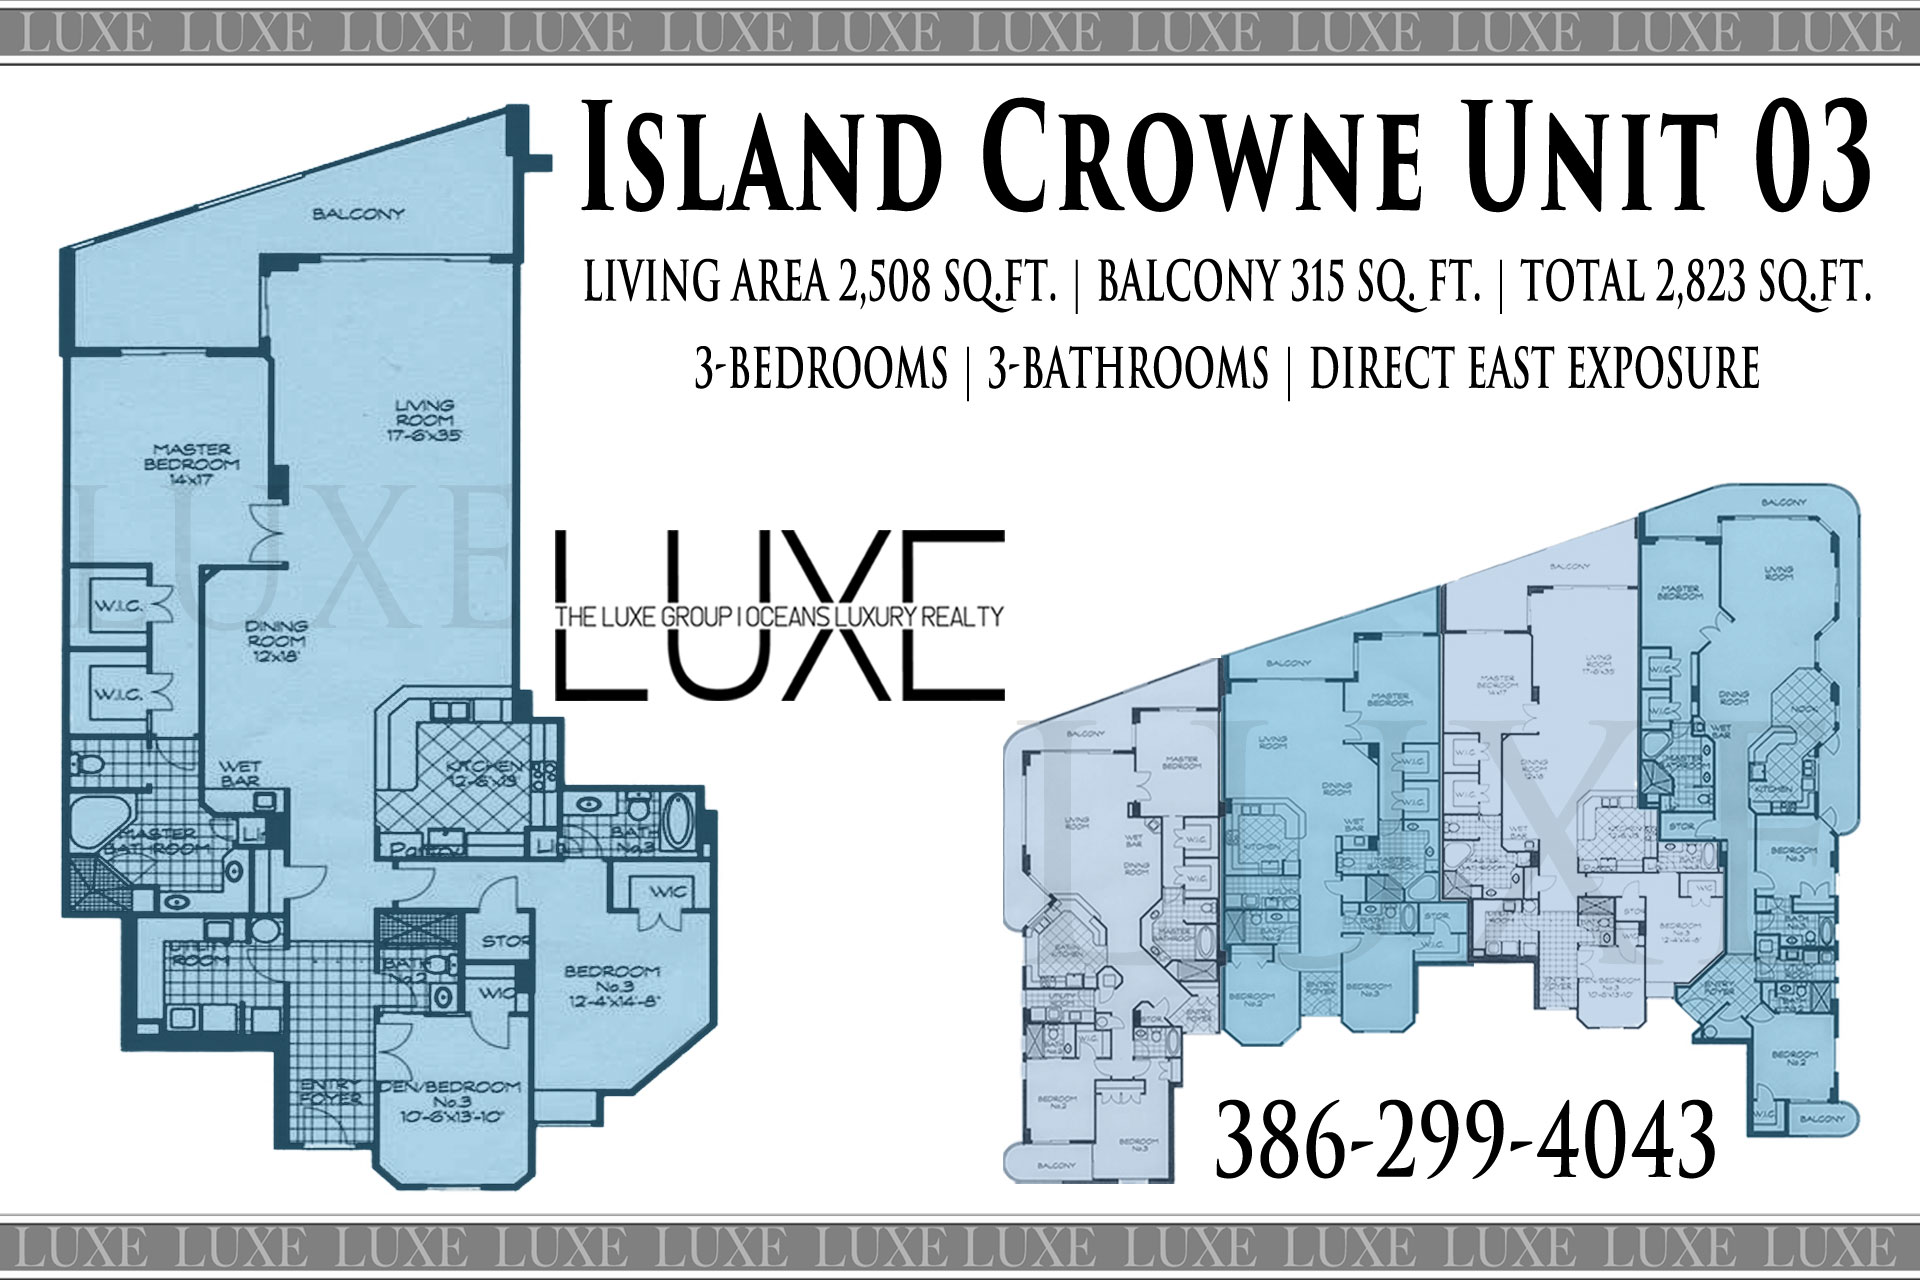 Island Crowne Condo Unit 03 Floor Plan C - 1900 N Atlantic Ave Daytona Beach, Florida - The LUXE Group at Oceans Luxury Realty 386-299-4043